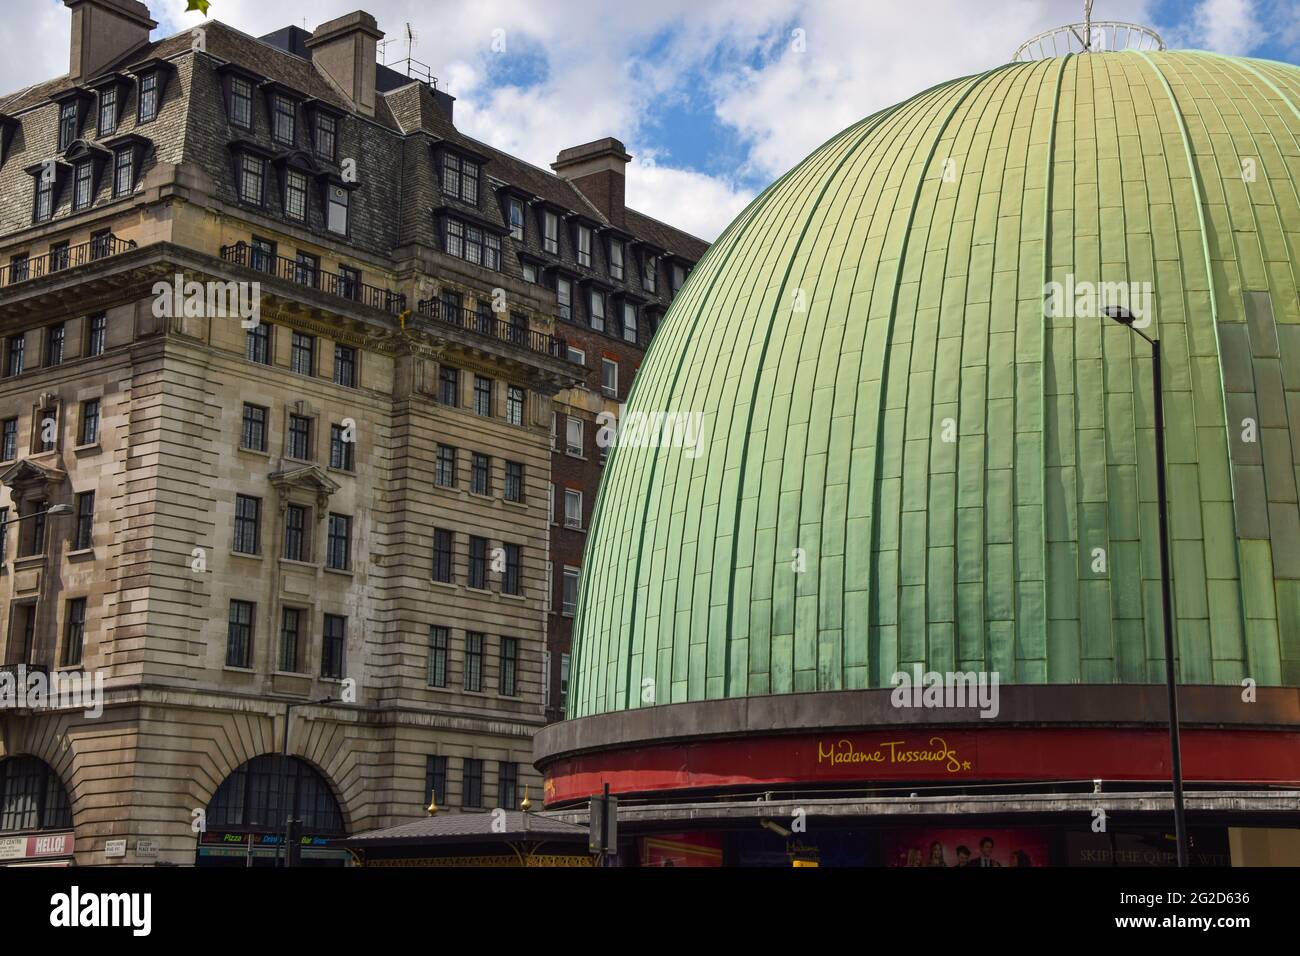 Madame Tussauds exterior, London, UK Stock Photo